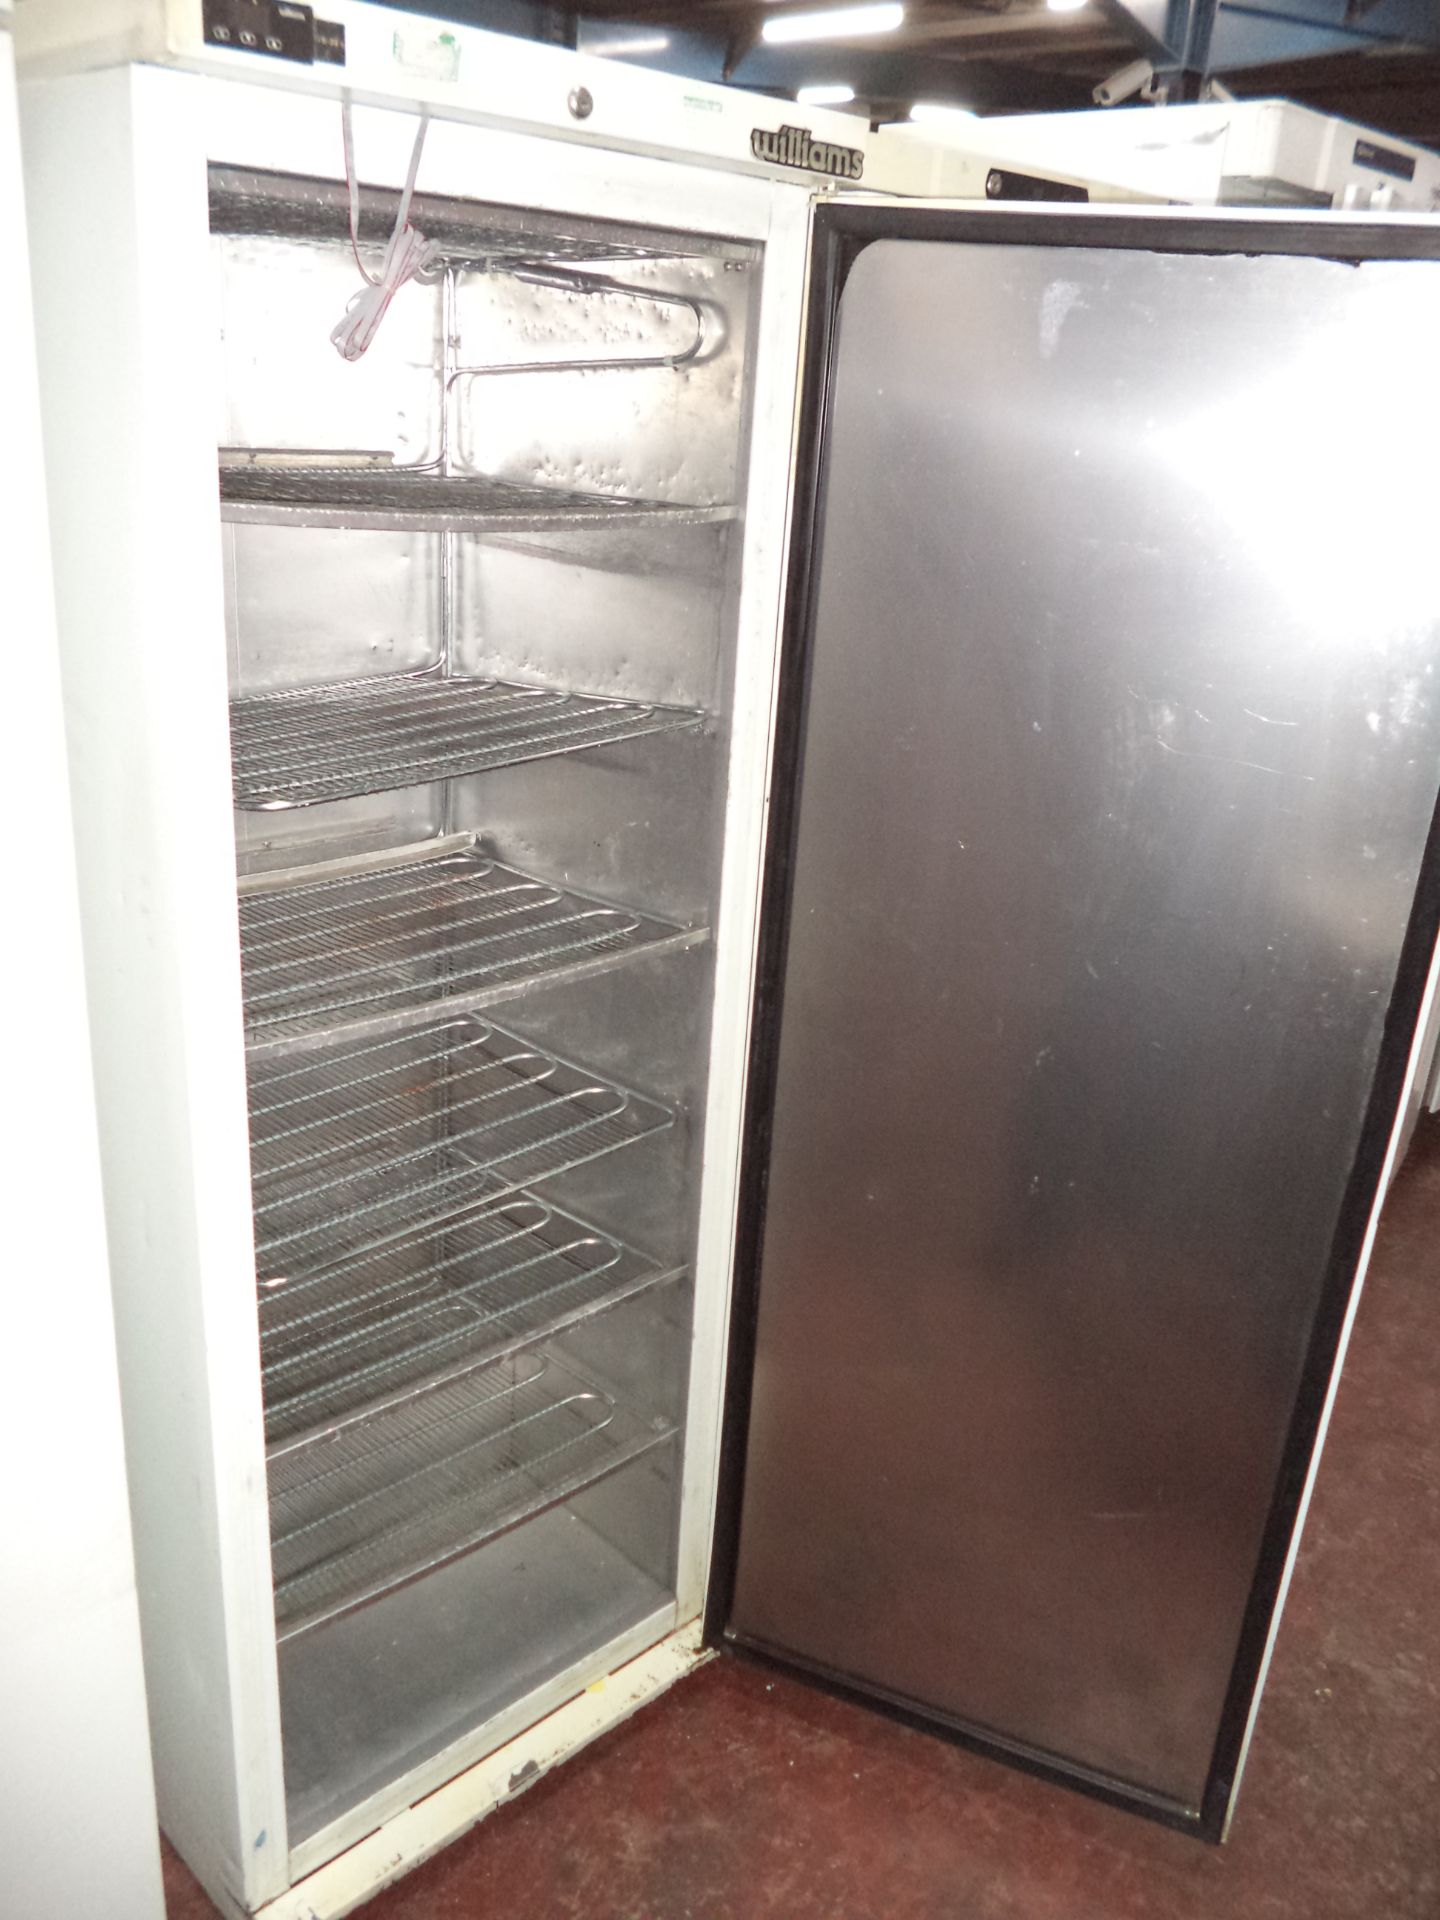 Williams floor standing freezer model LA400WA IMPORTANT: Please remember goods successfully bid upon - Image 2 of 3